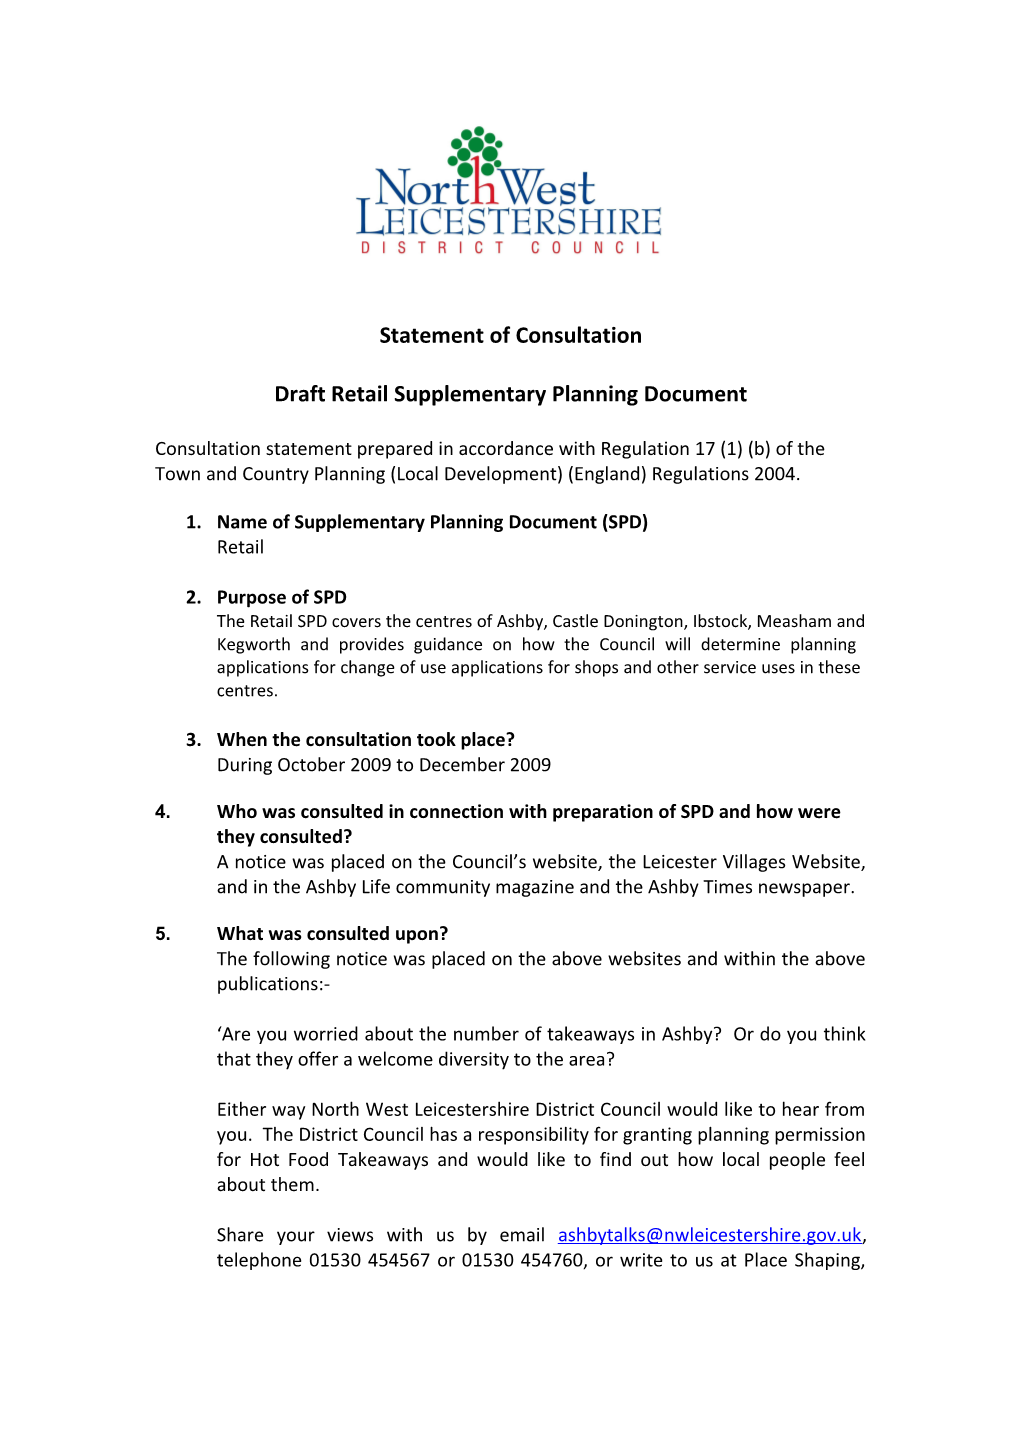 Draft Retail Supplementary Planning Document